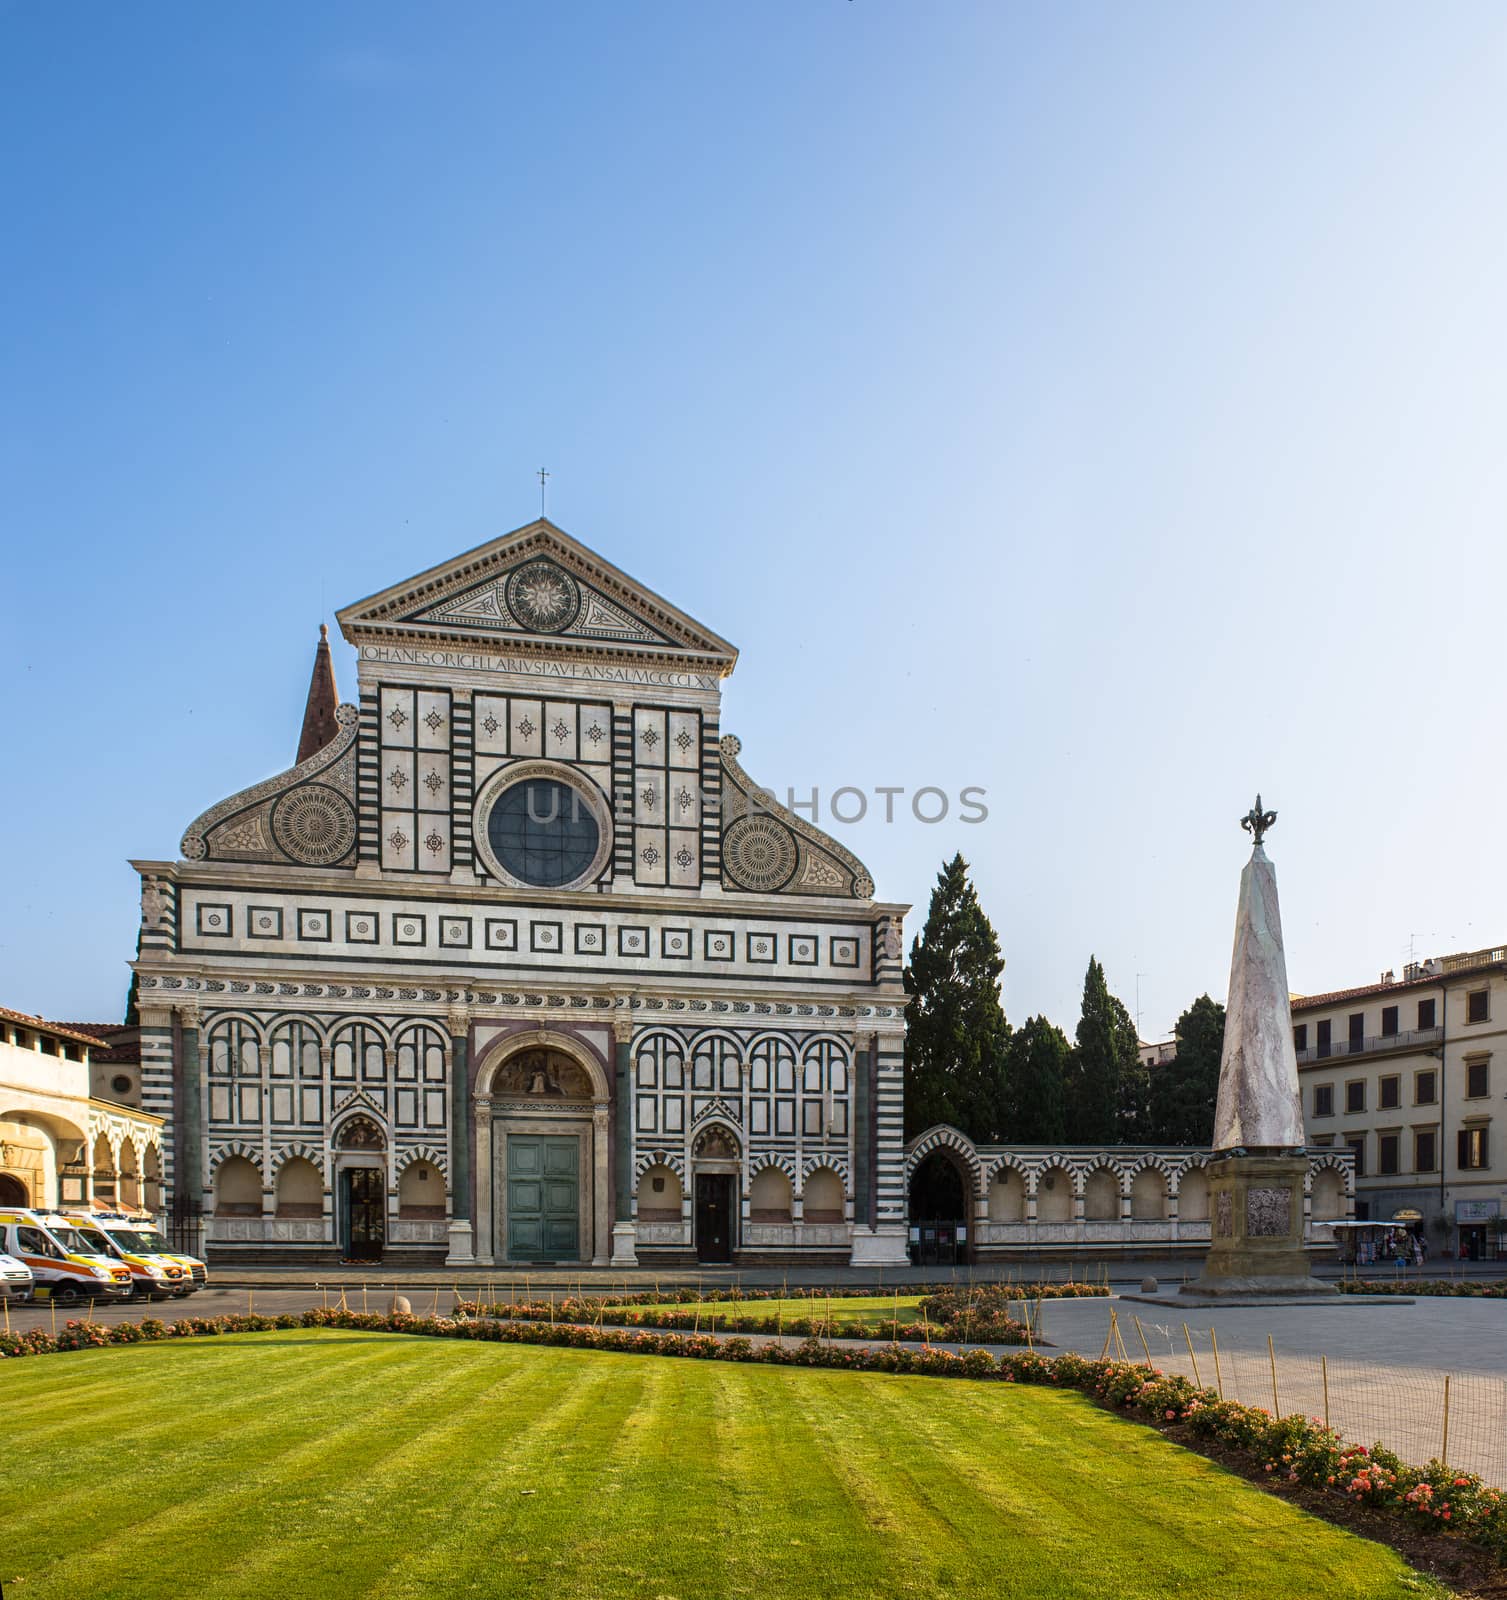 Santa Maria Novella, with the front symbol of Renaissance architecture